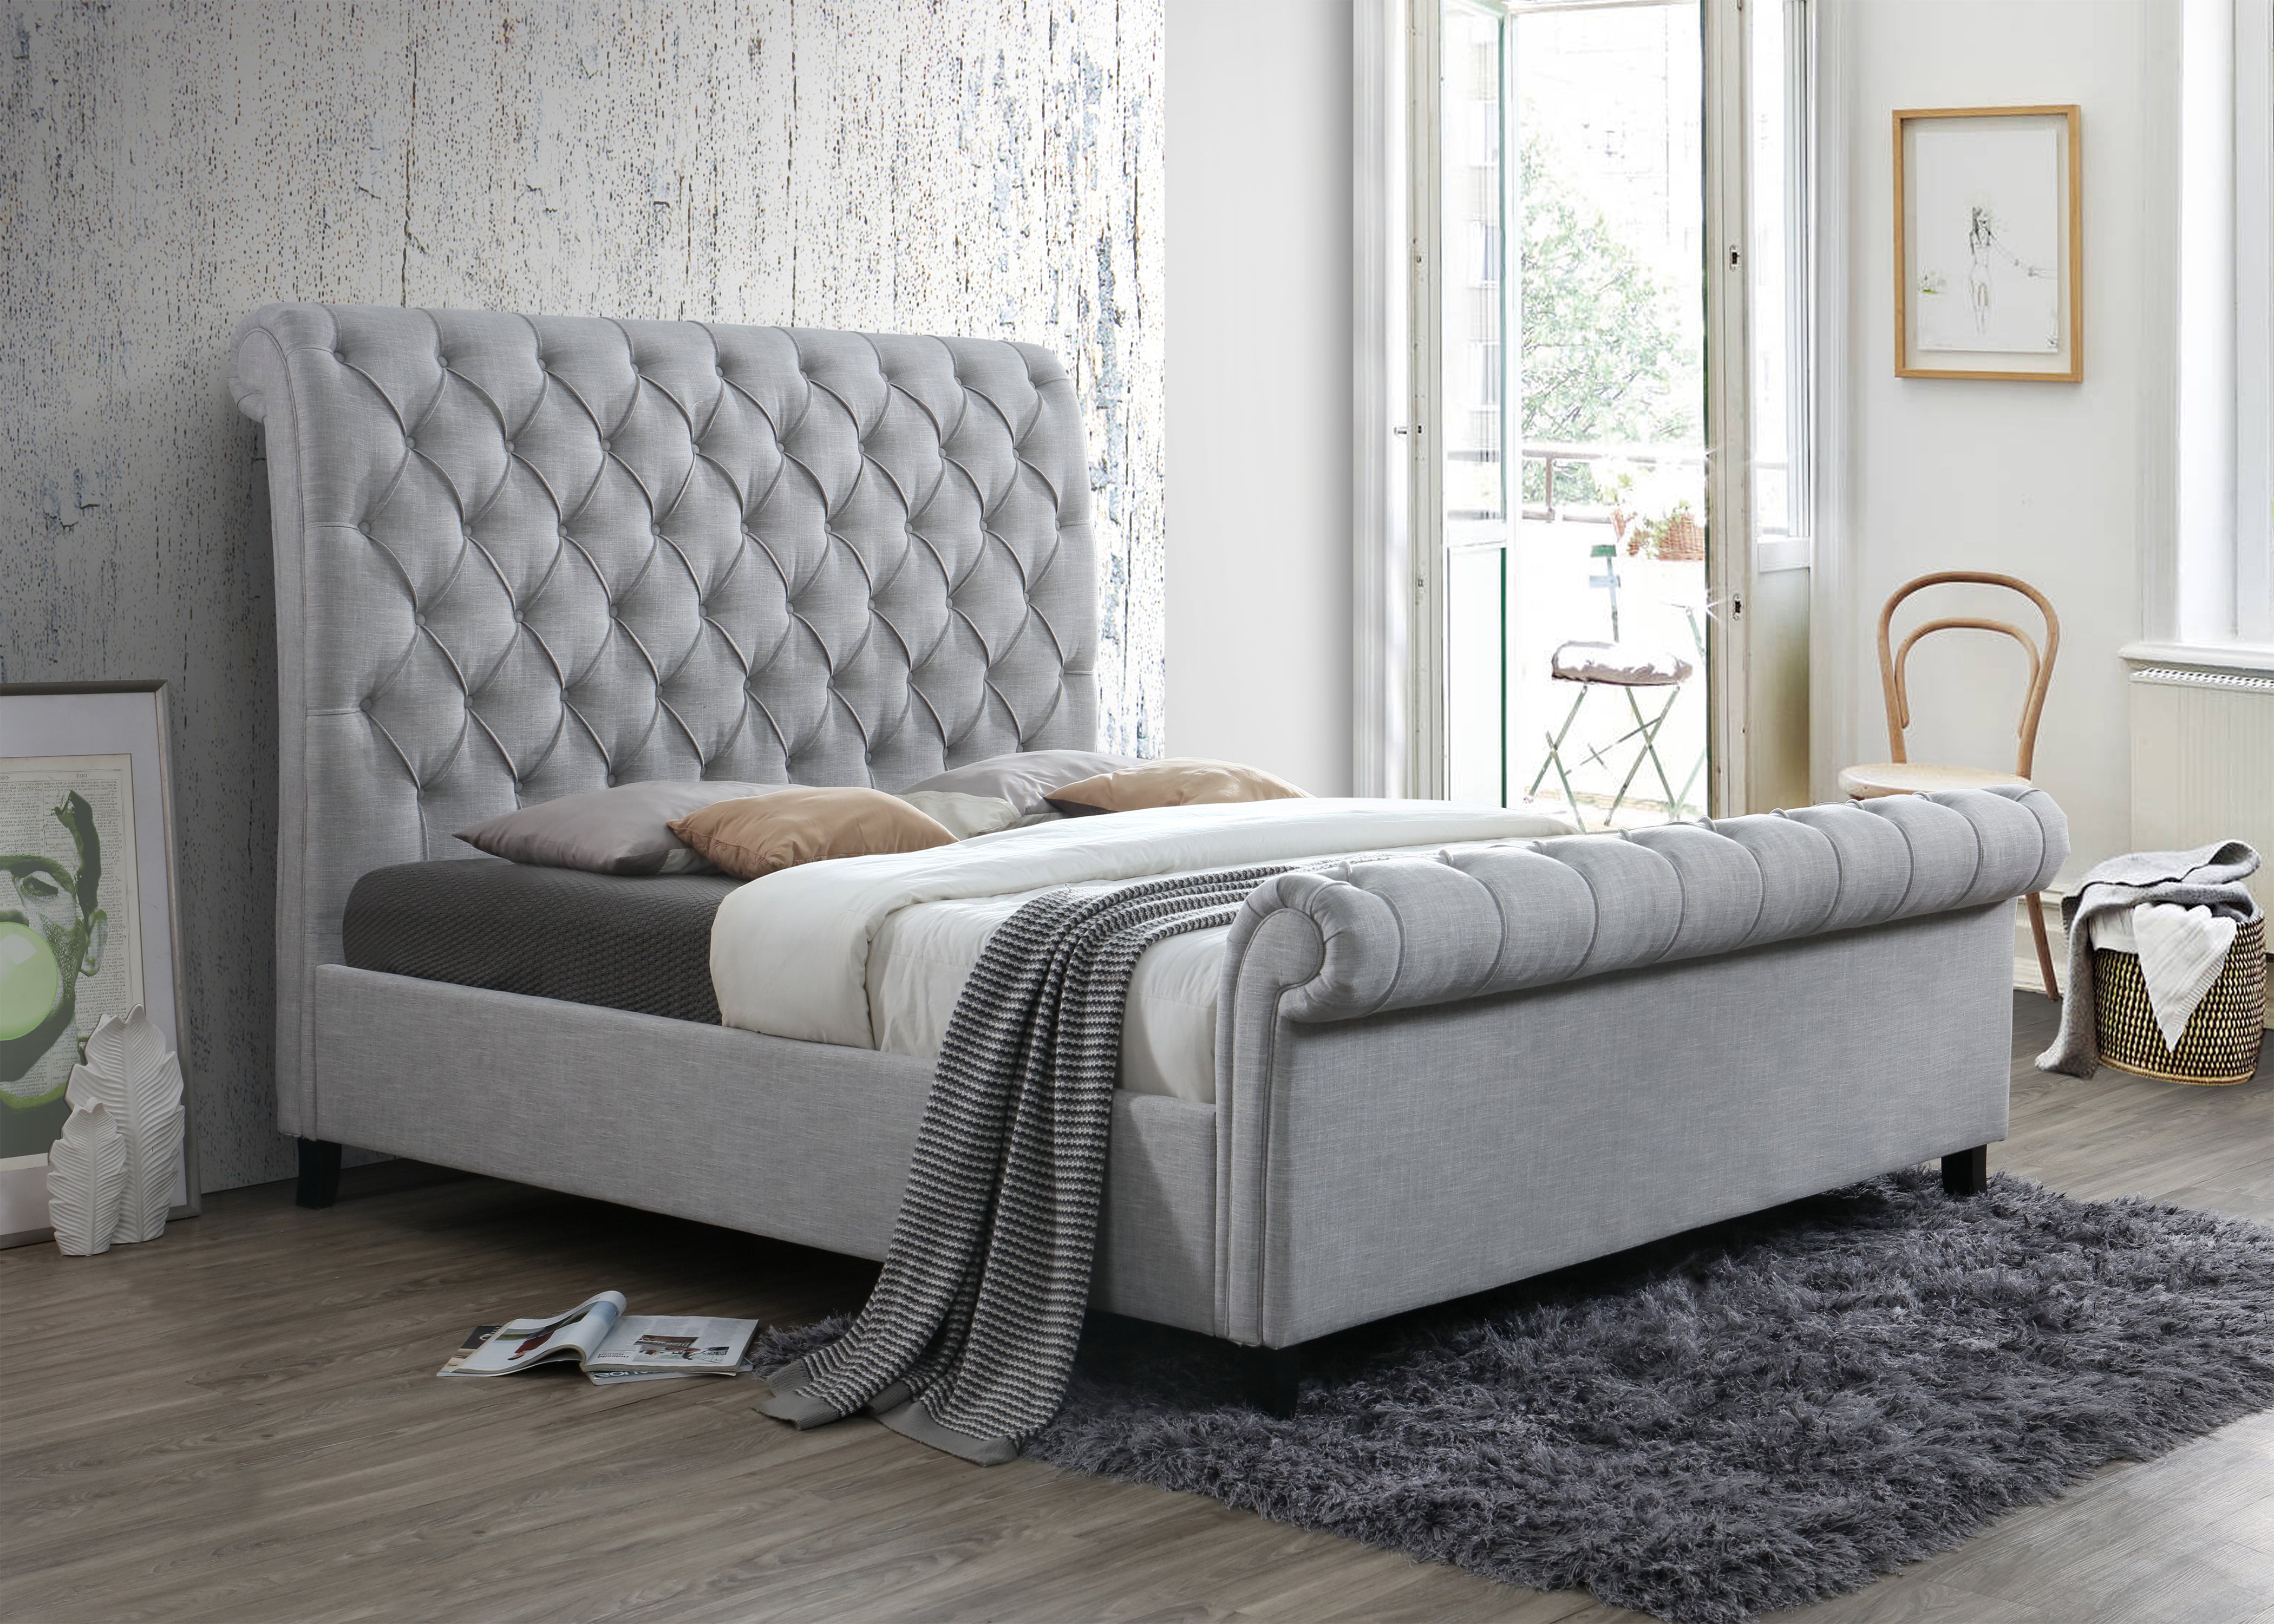 Louis Philip Black Queen Sleigh Bed - Luna Furniture from Crown Mark